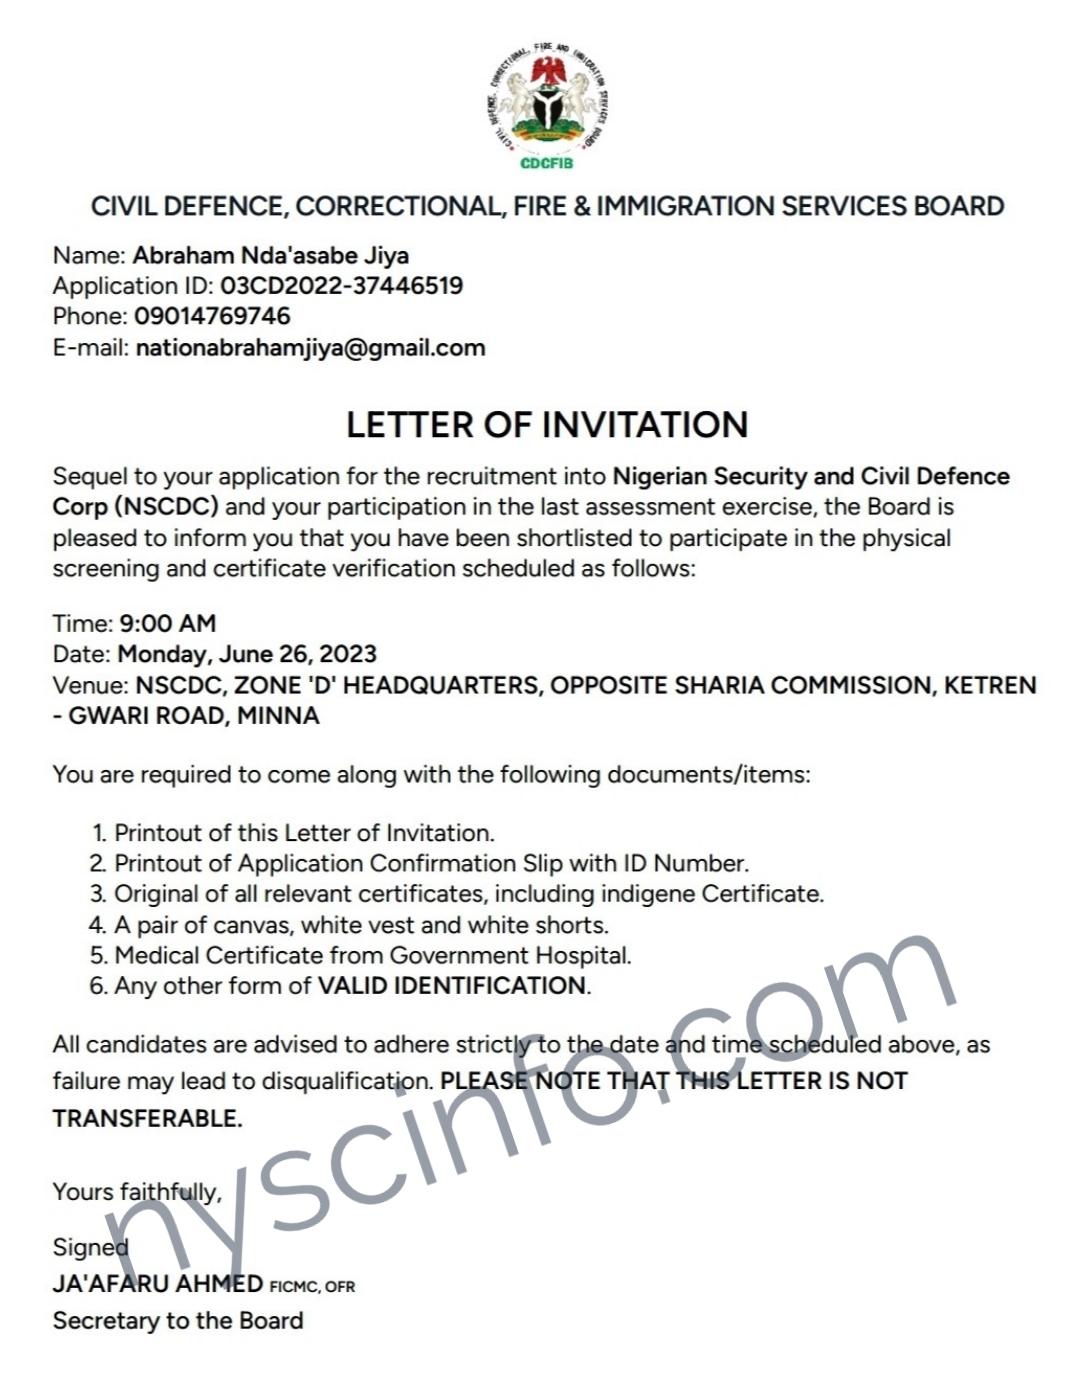 NSCDC invitation letter sample